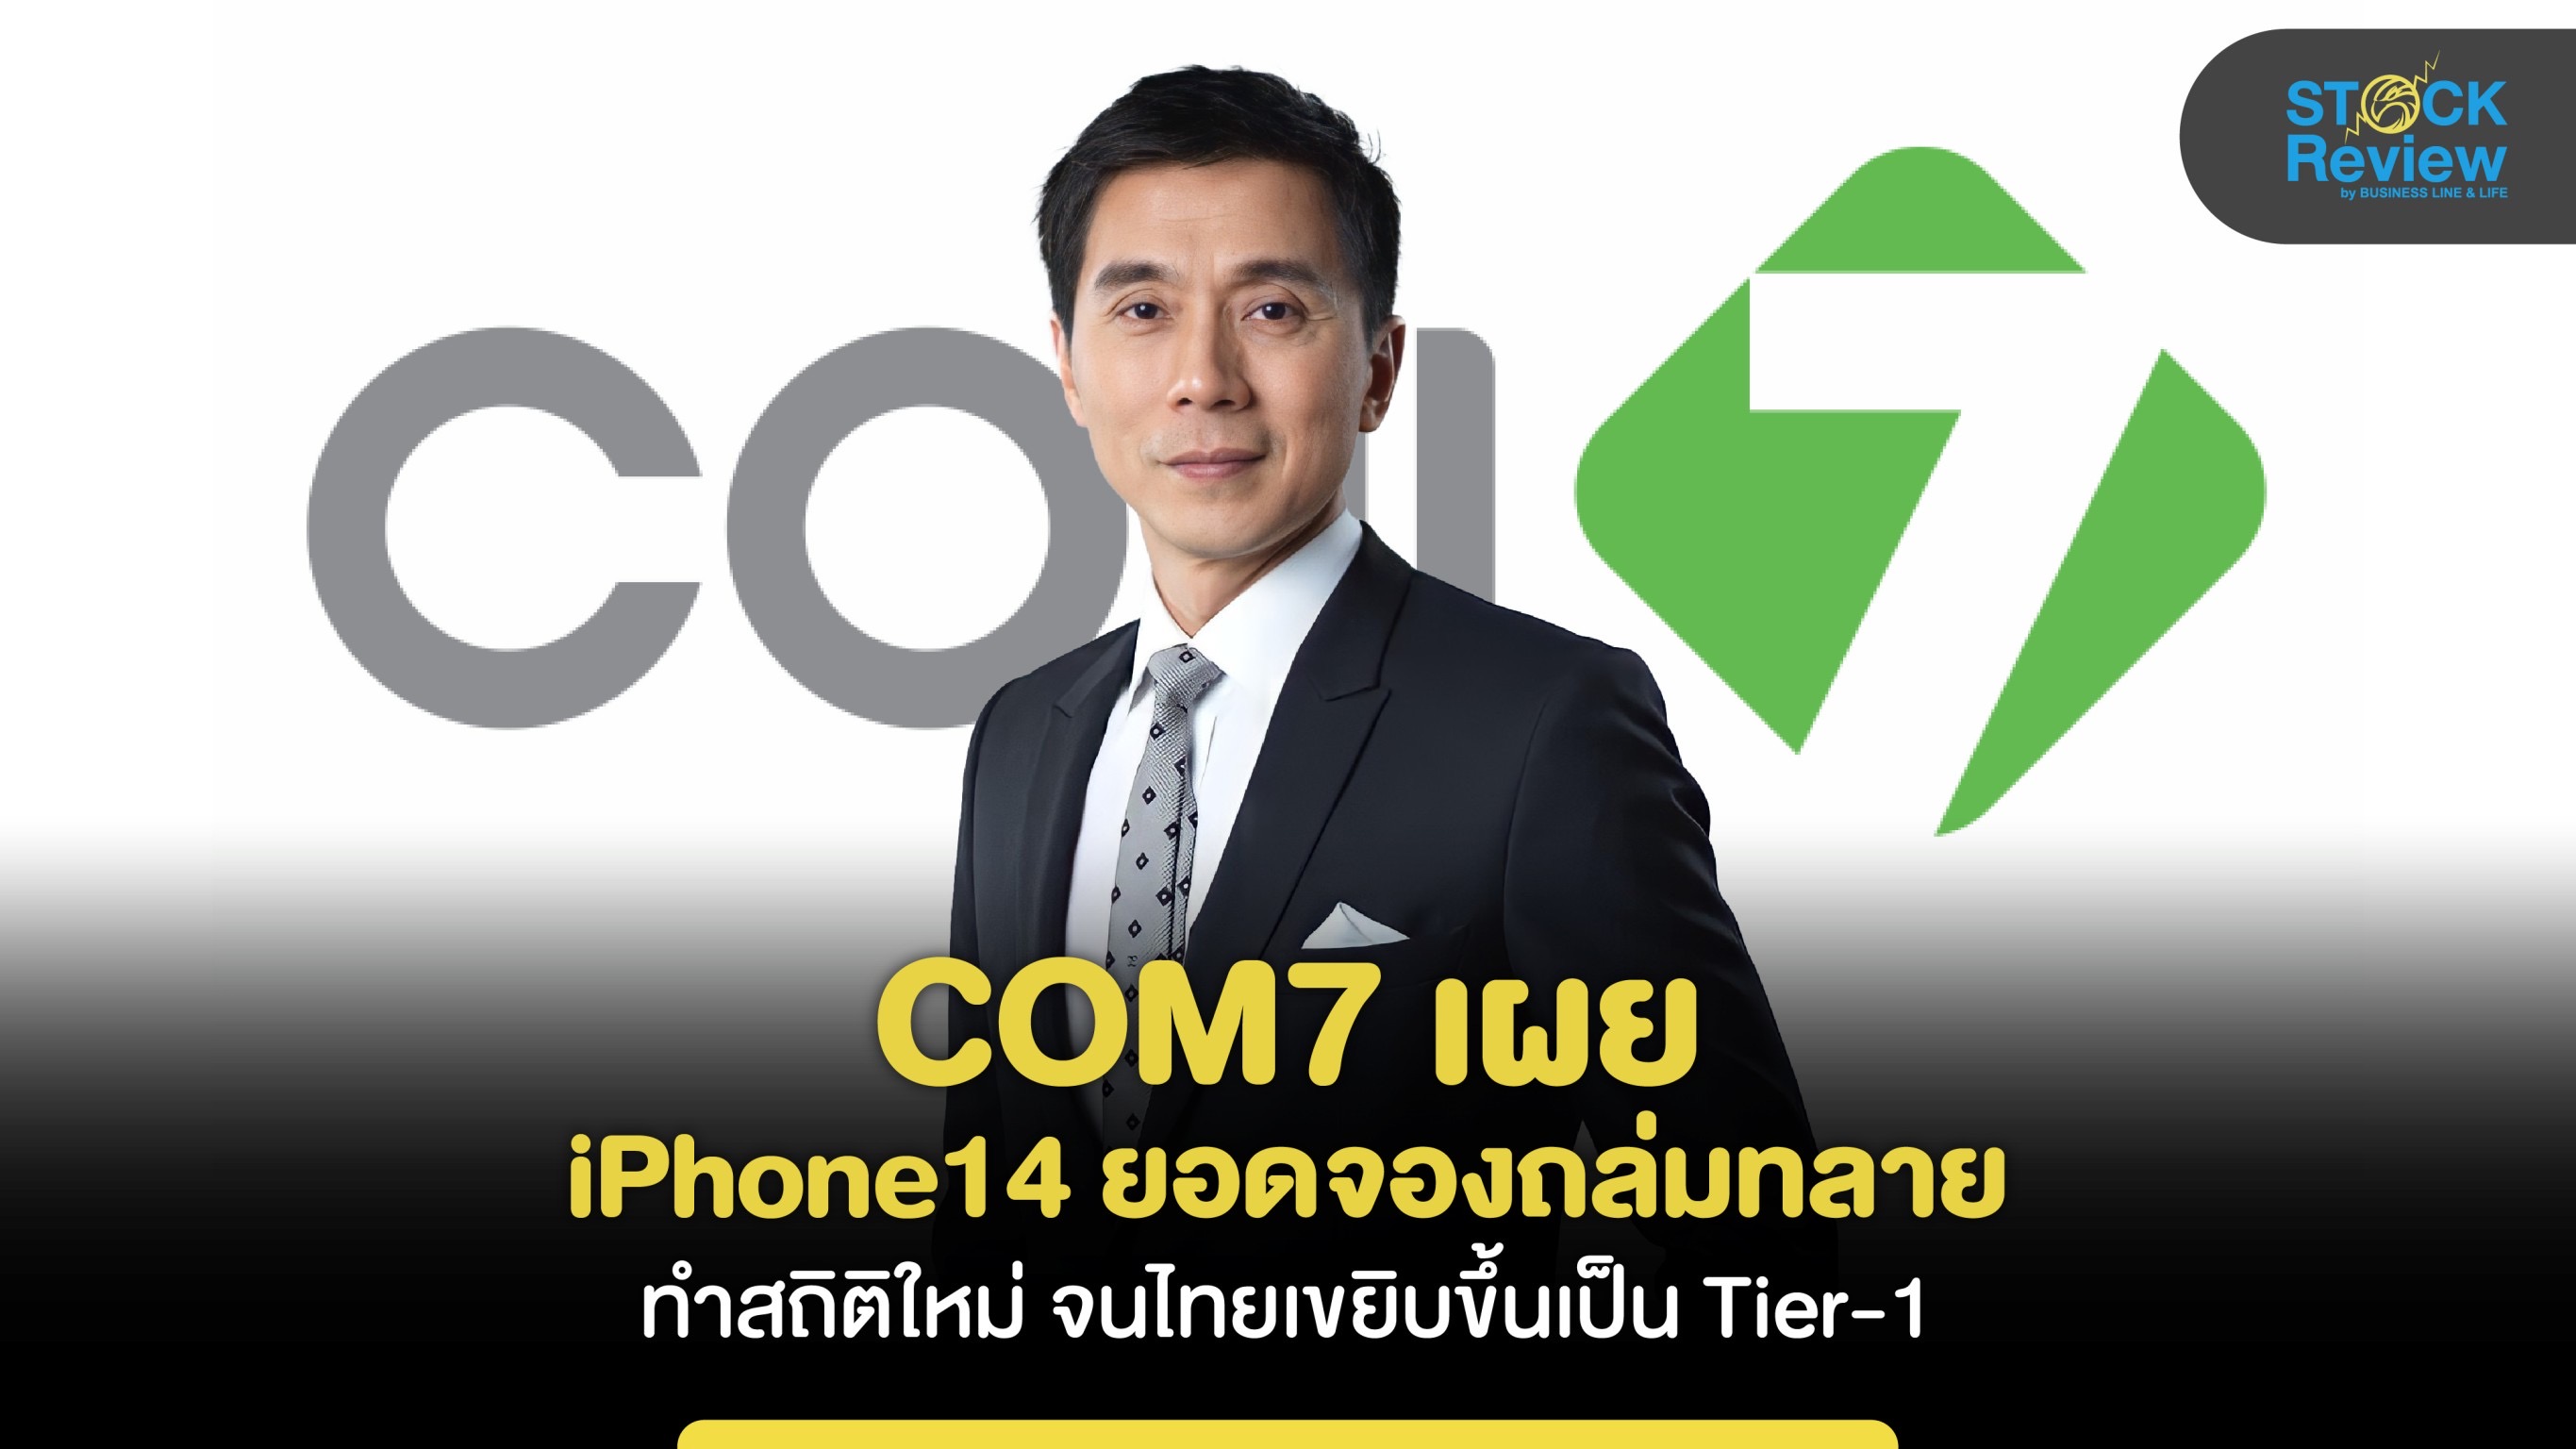 COM7 เผย iPhone14 ยอดจองถล่มทลายทำสถิติใหม่ ไทยเขยิบขึ้นเป็น Tier-1